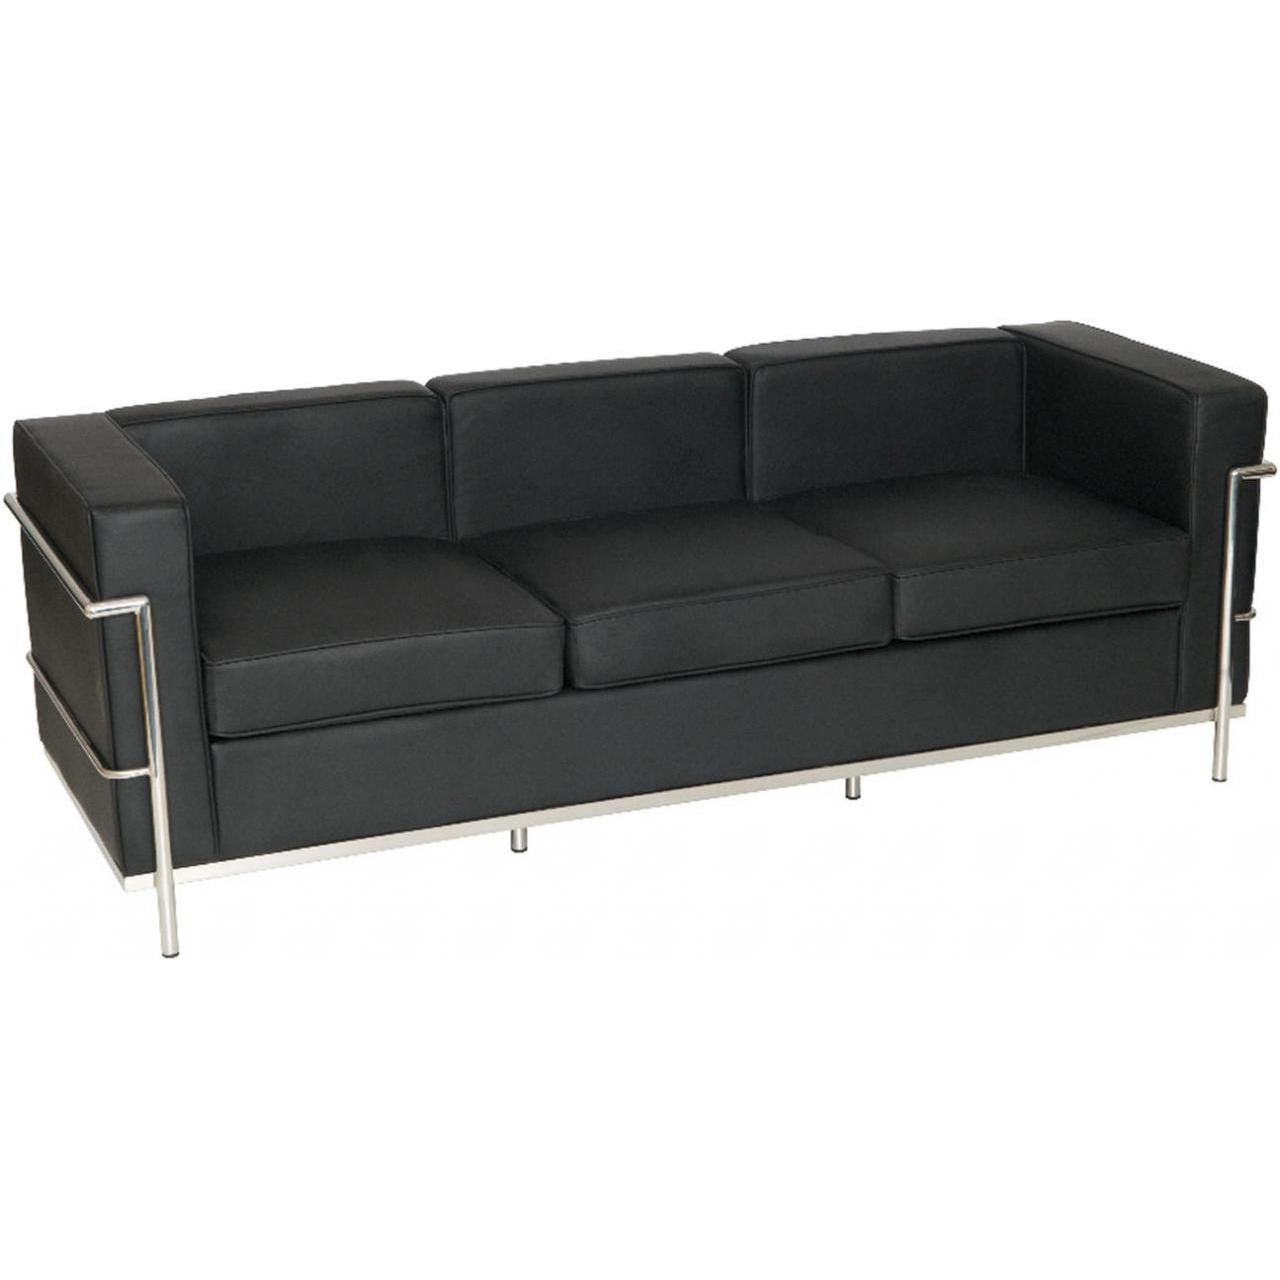 OI 'Le Corbusier' Style Sofa Range